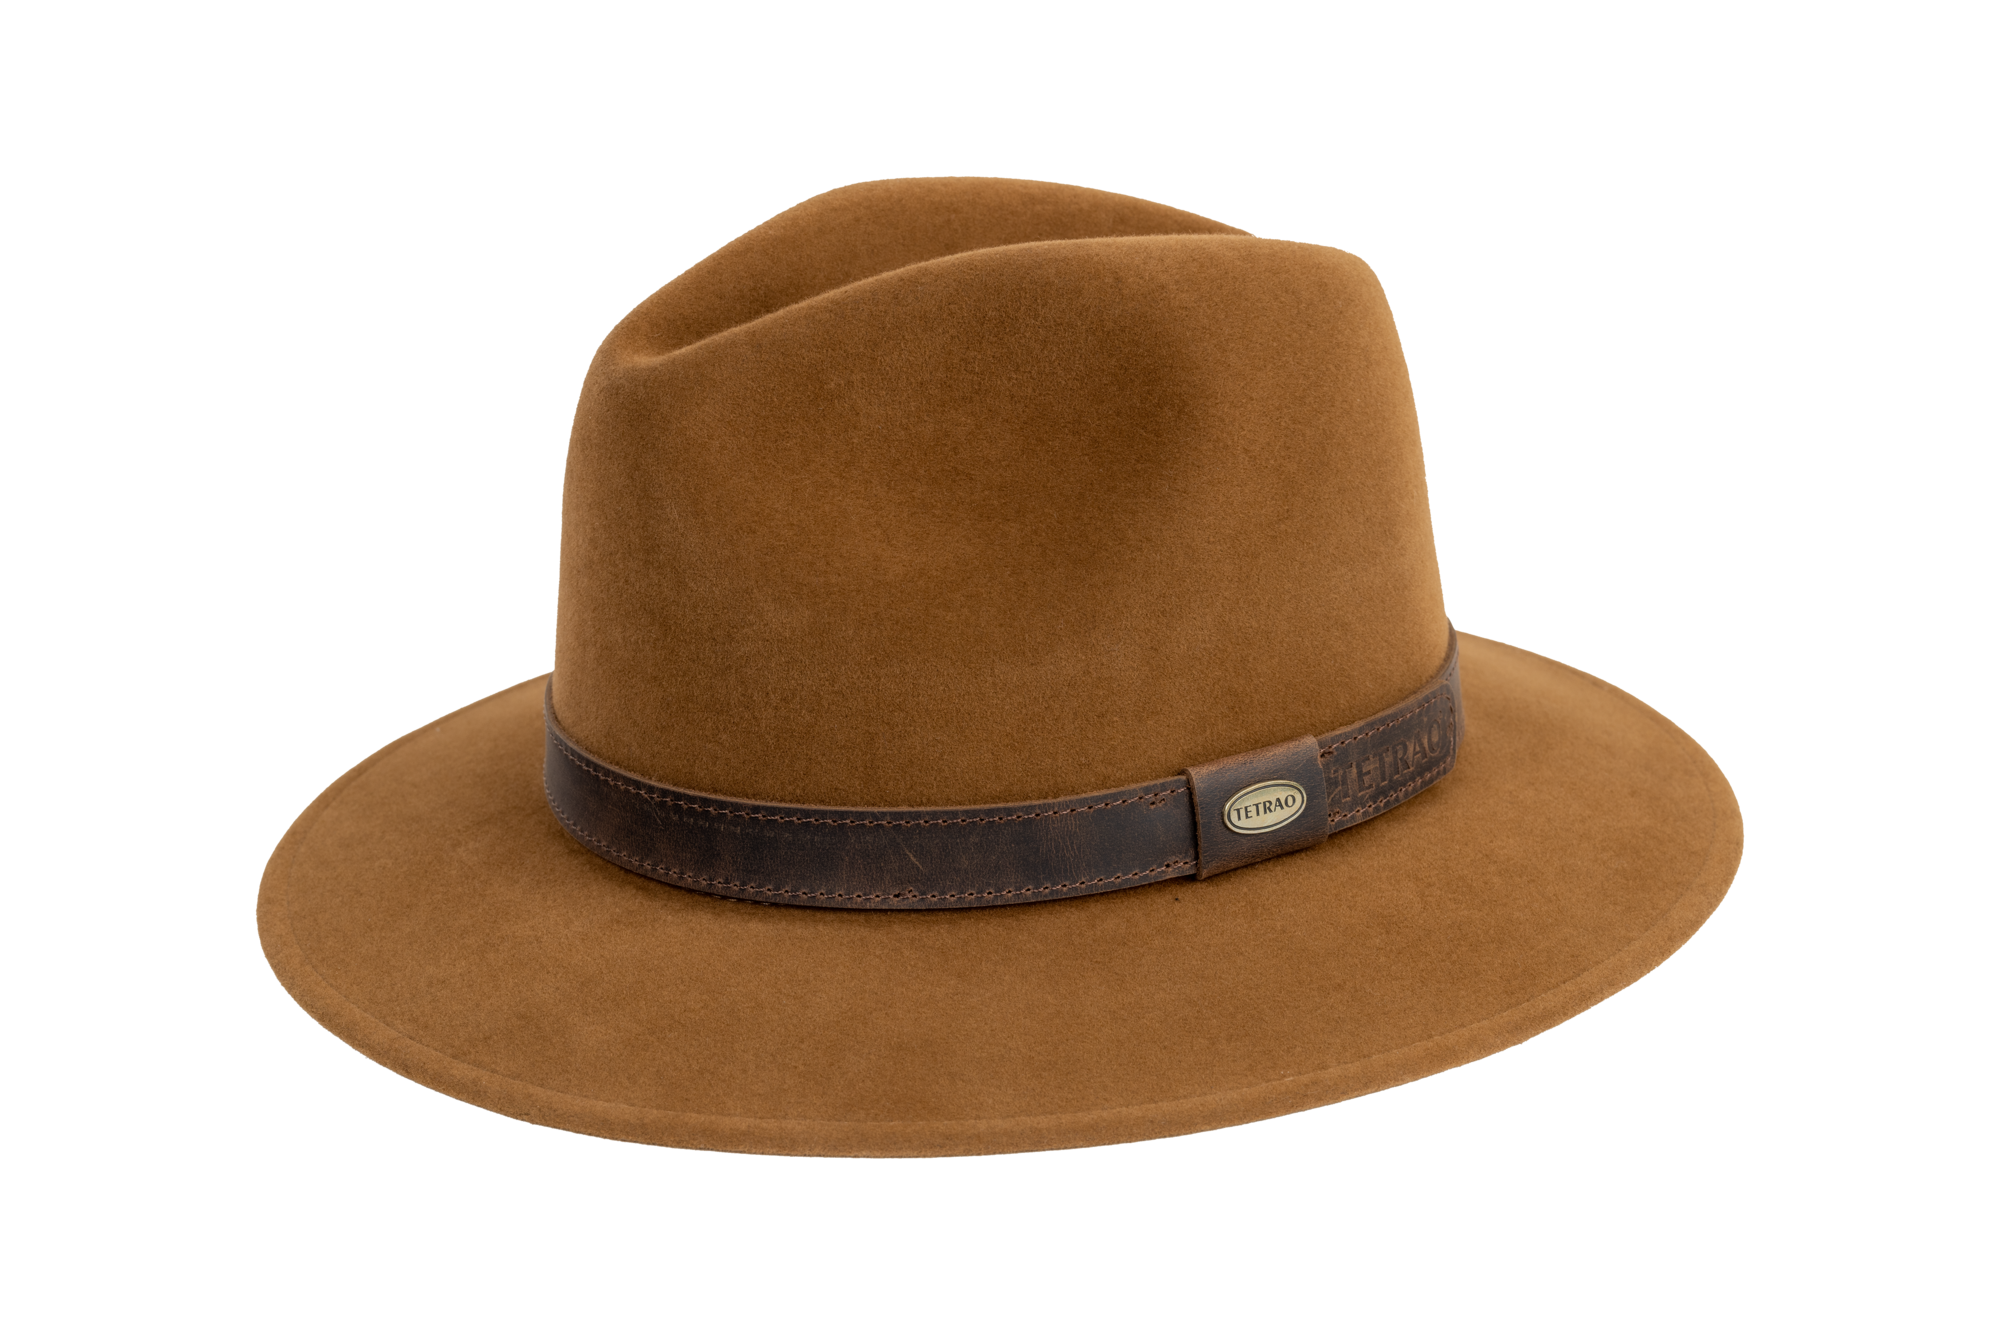 Poľovnícky klobúk TETRAO Exclusive zajac - hnedý  60